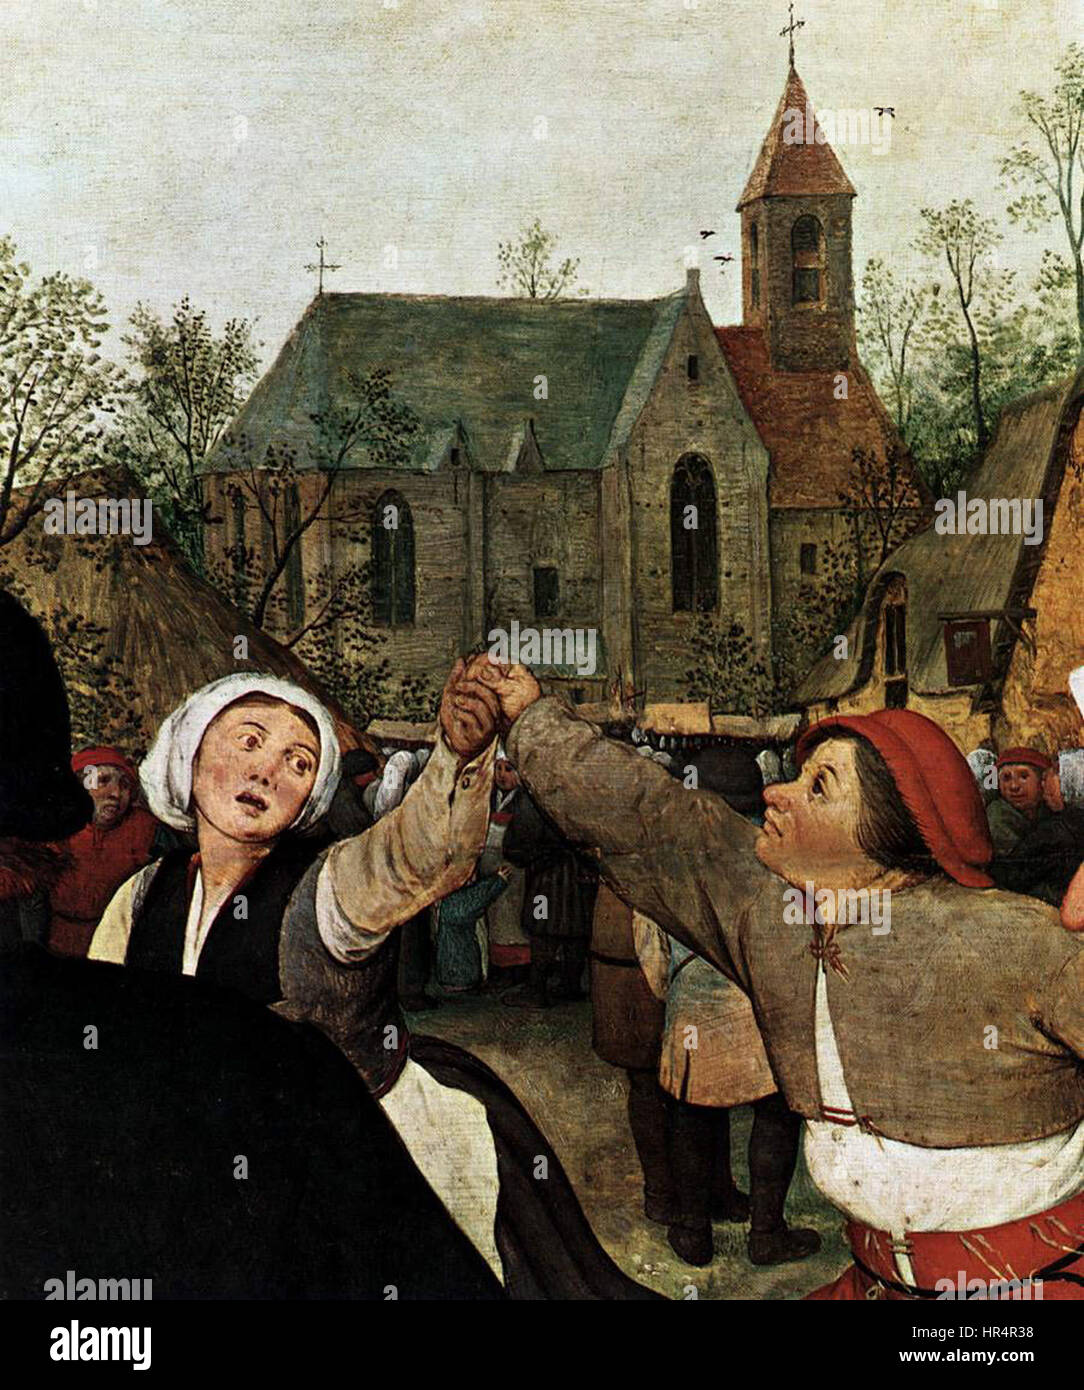 Pieter Bruegel the Elder - The Peasant Dance (detail) - WGA3500 Stock Photo